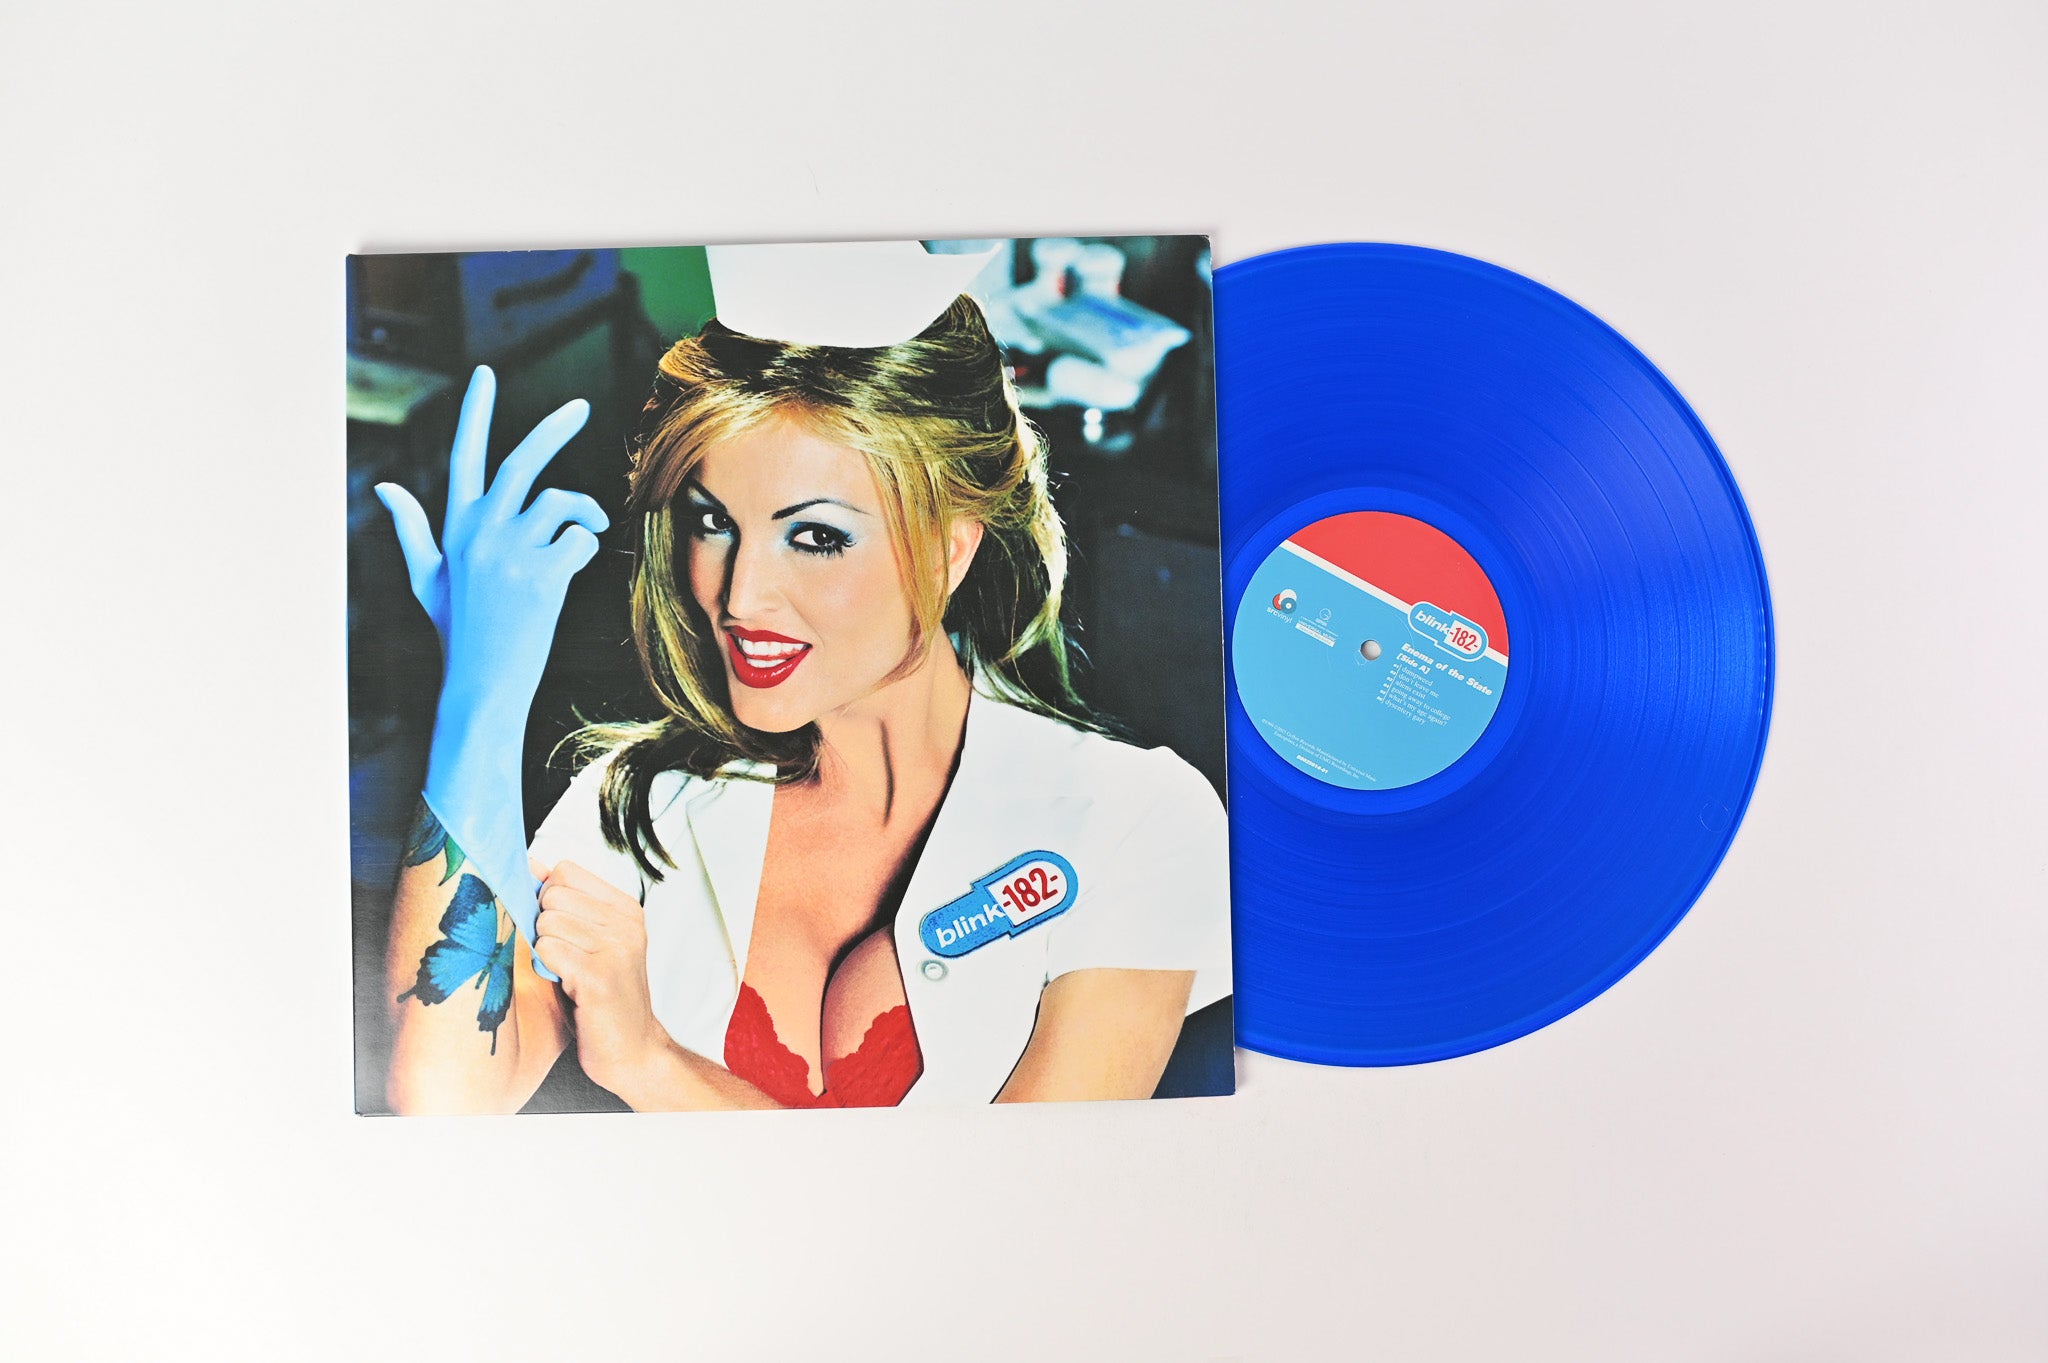 Blink-182 - Enema Of The State on Universal Ltd Blue Translucent Reissue